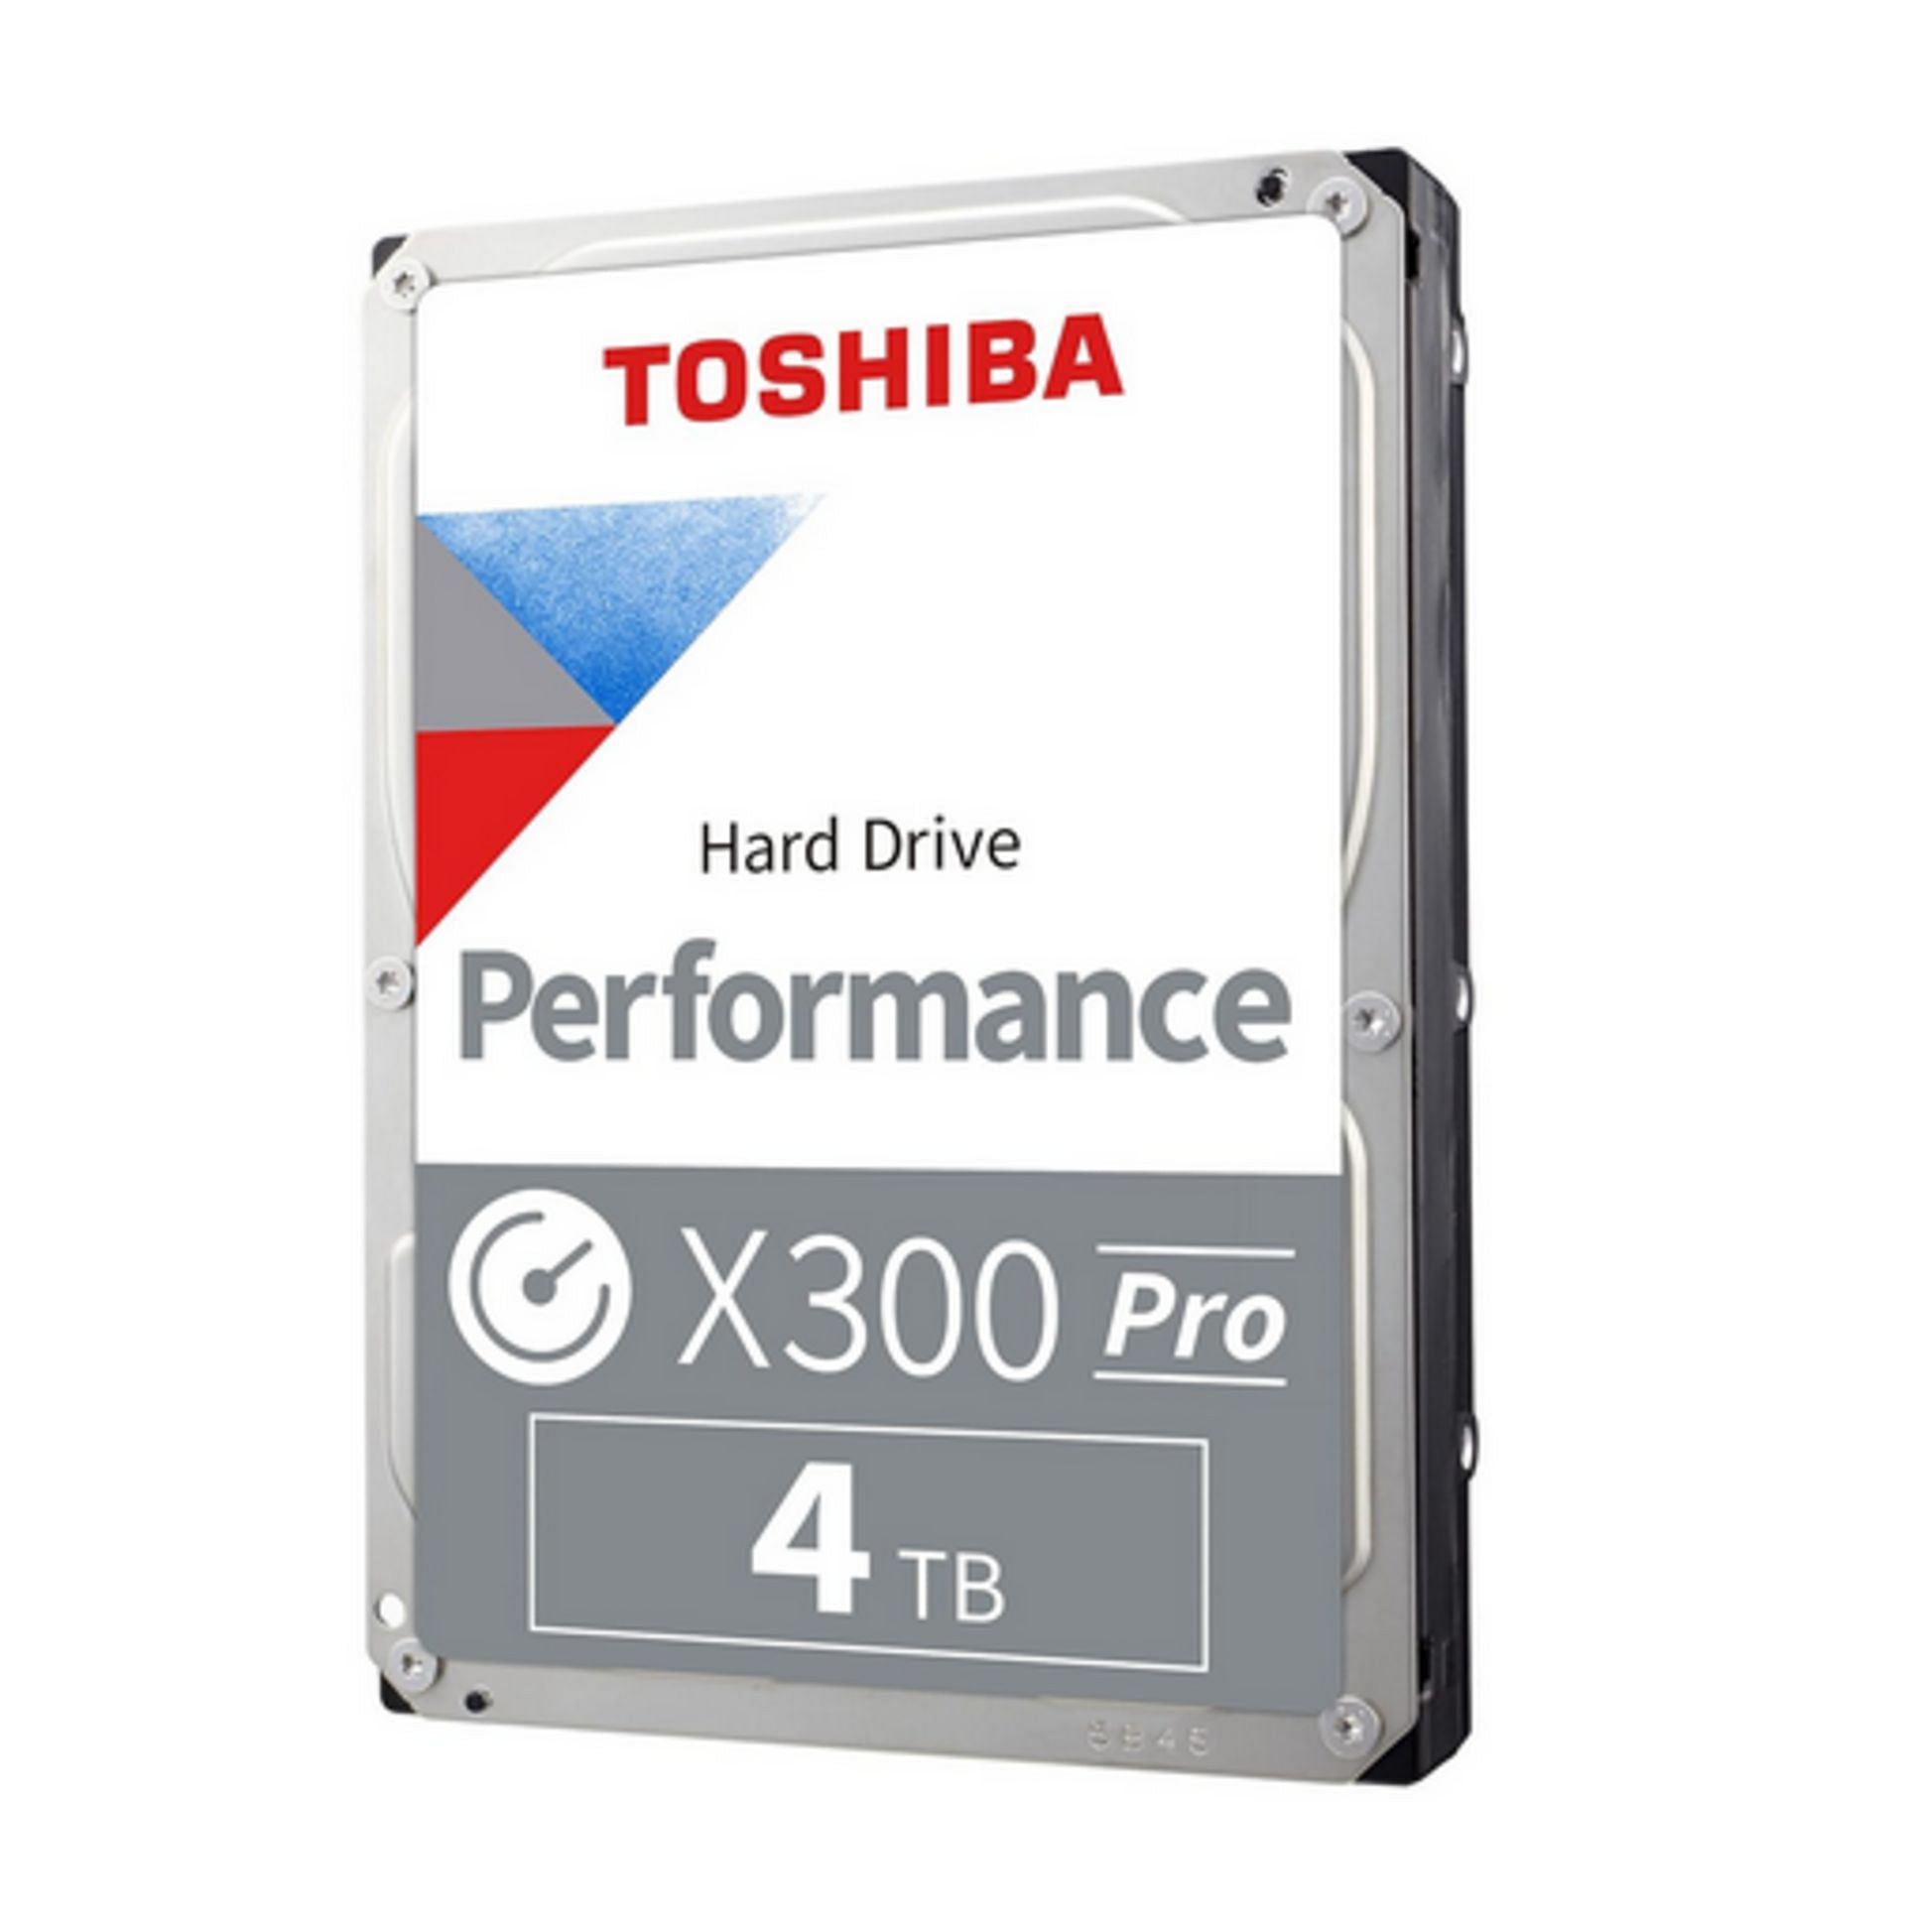 Toshiba X300 Pro (Image via Toshiba)